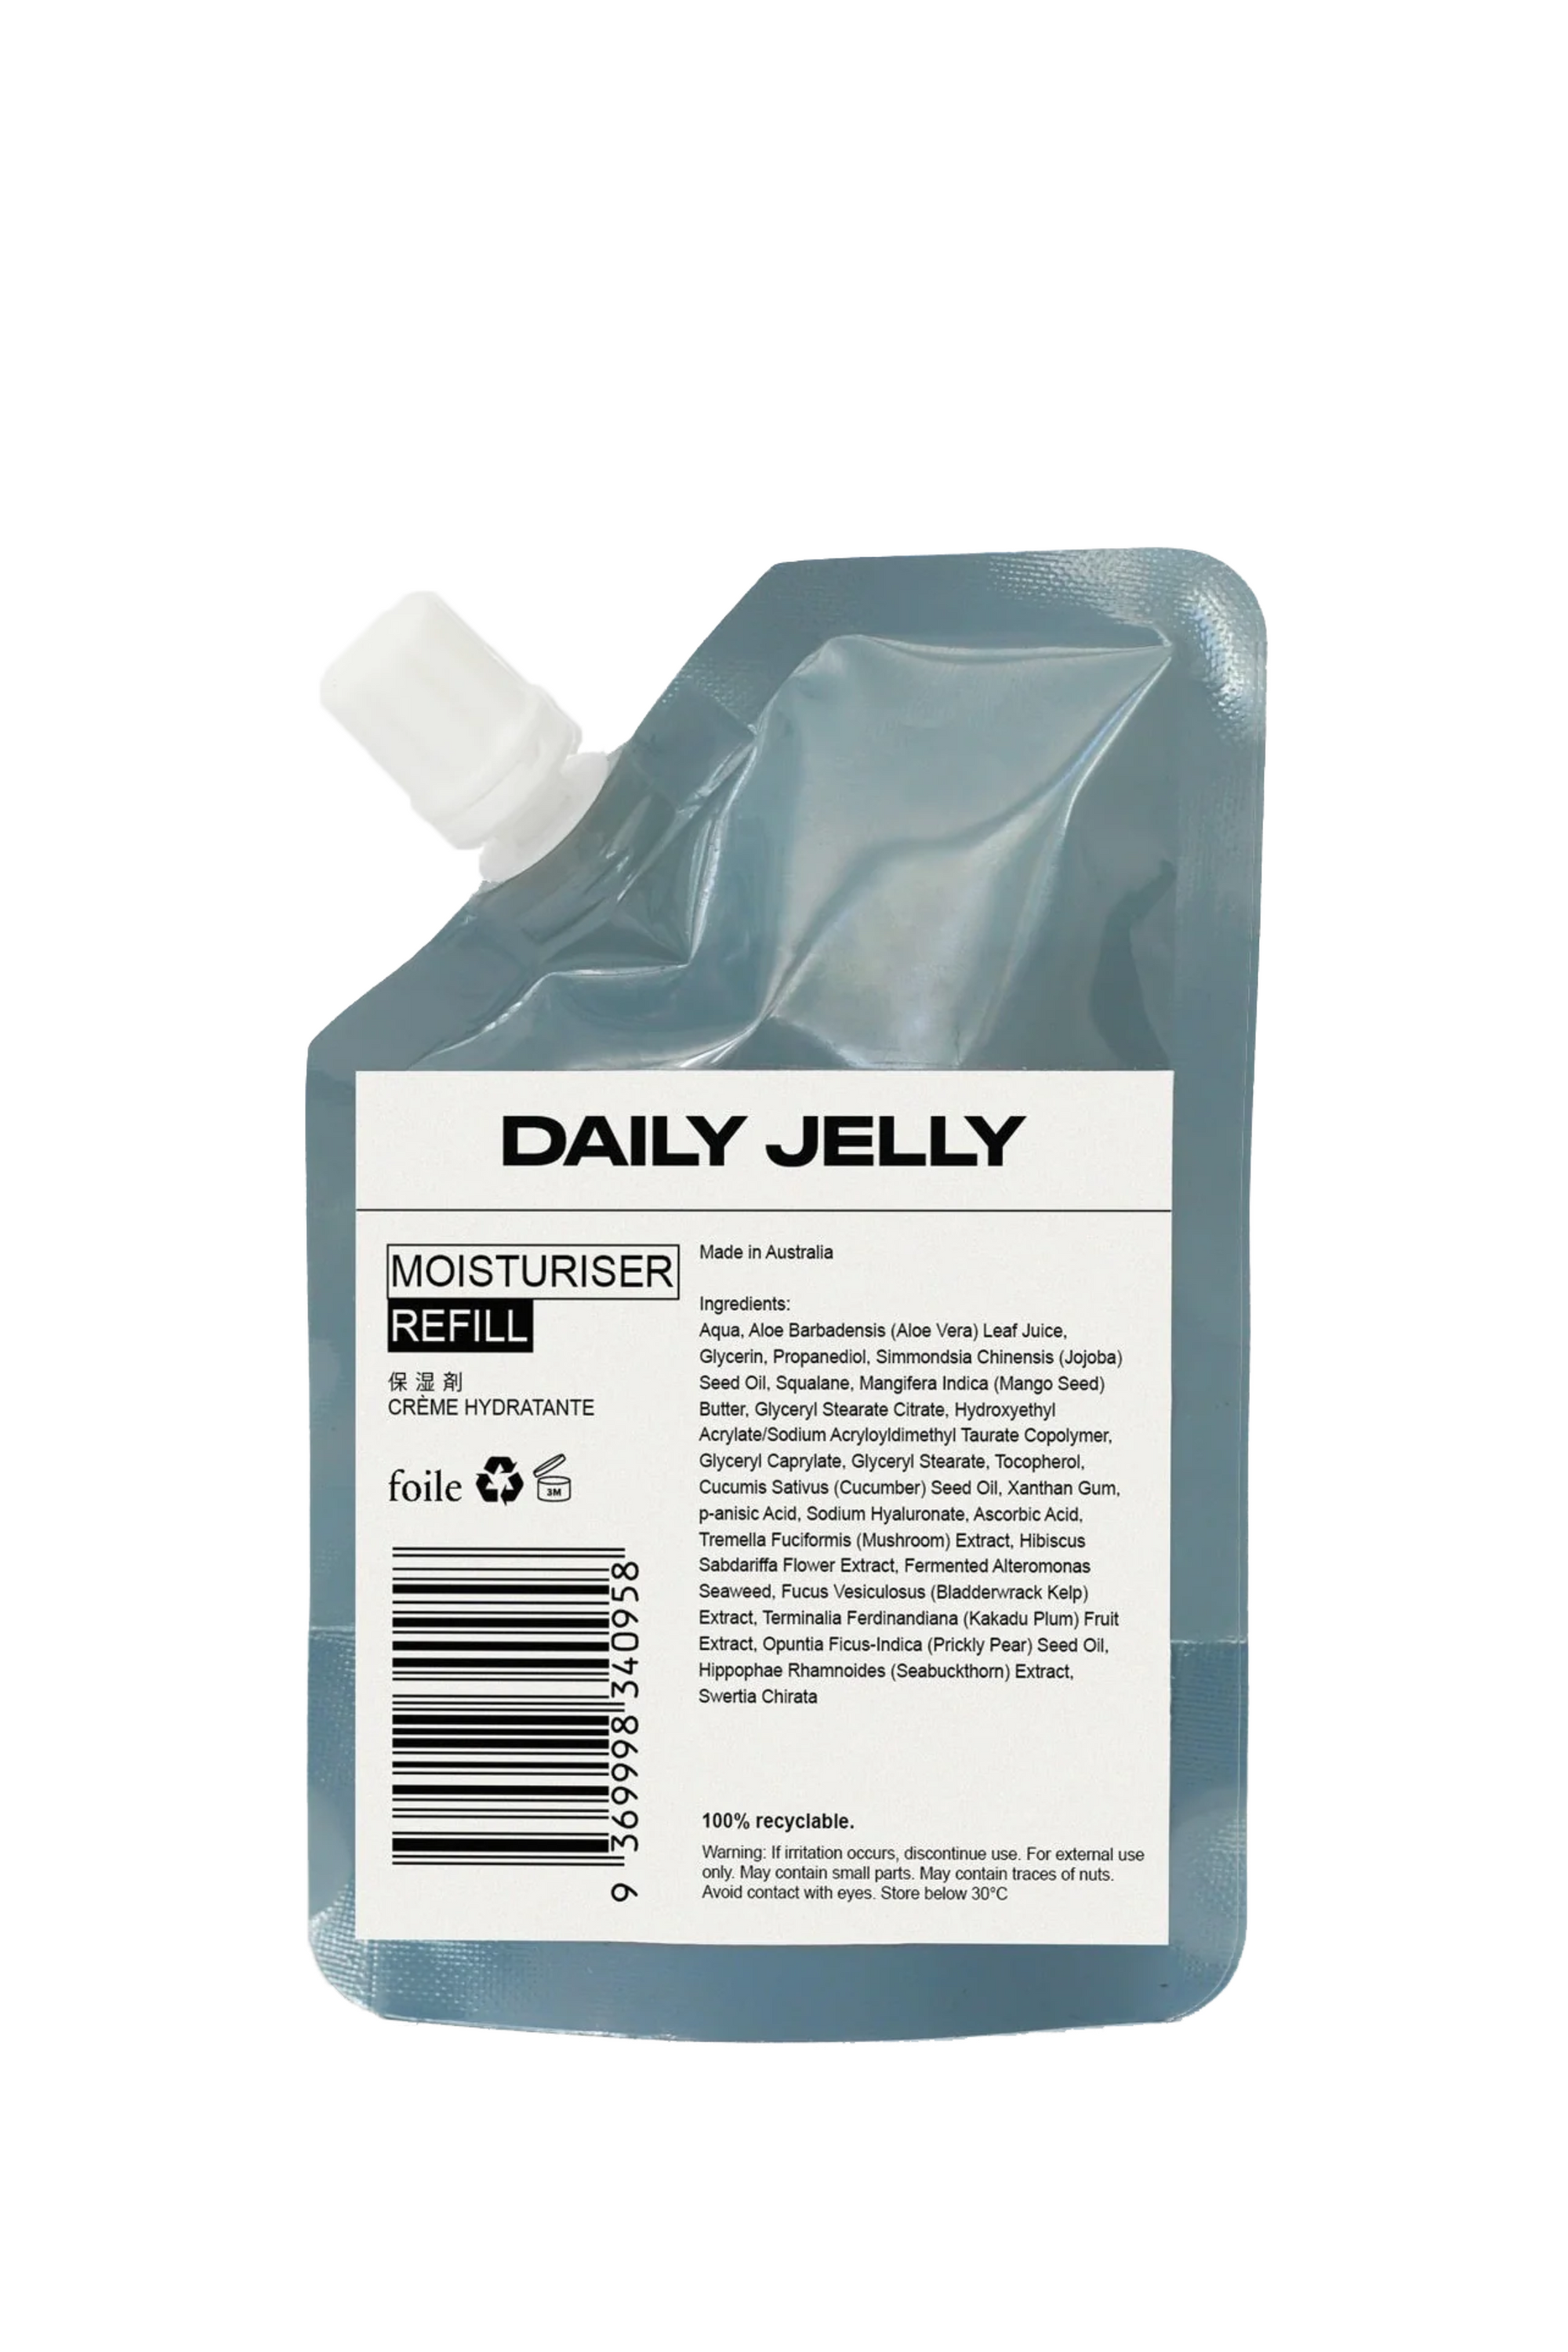 Daily Jelly Moisturiser Refill